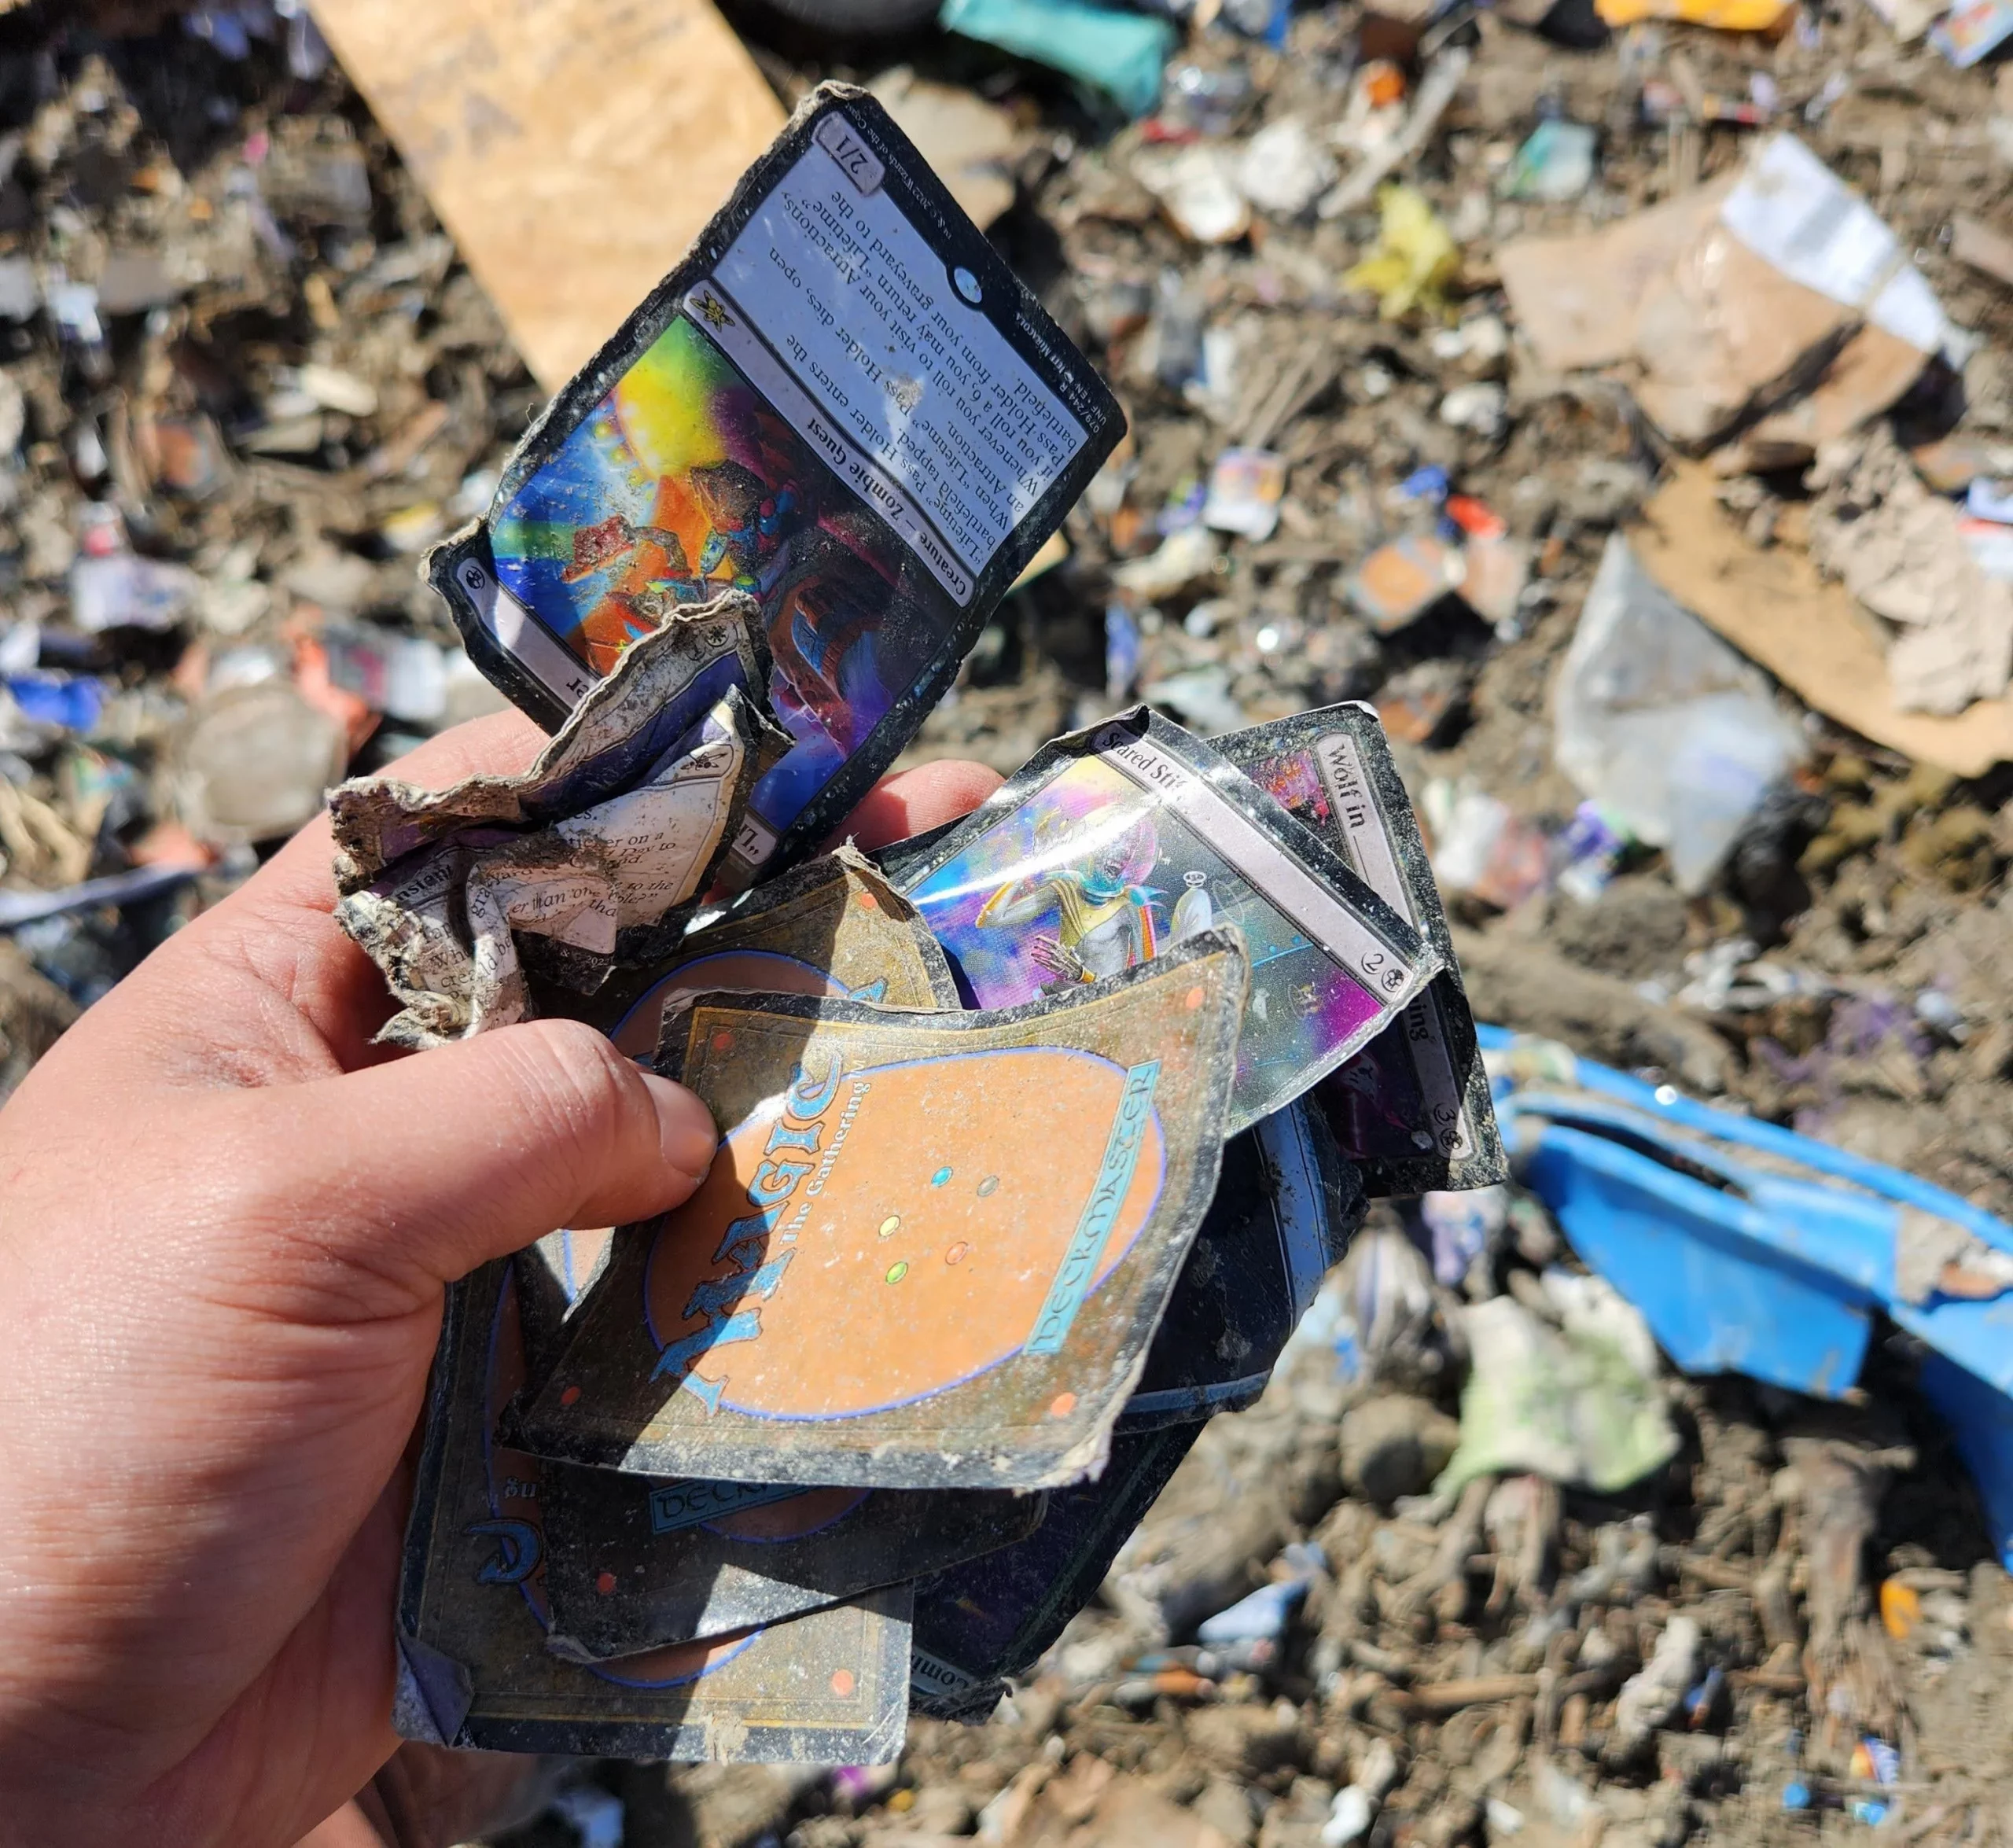 Damaged Magic cards in landfill